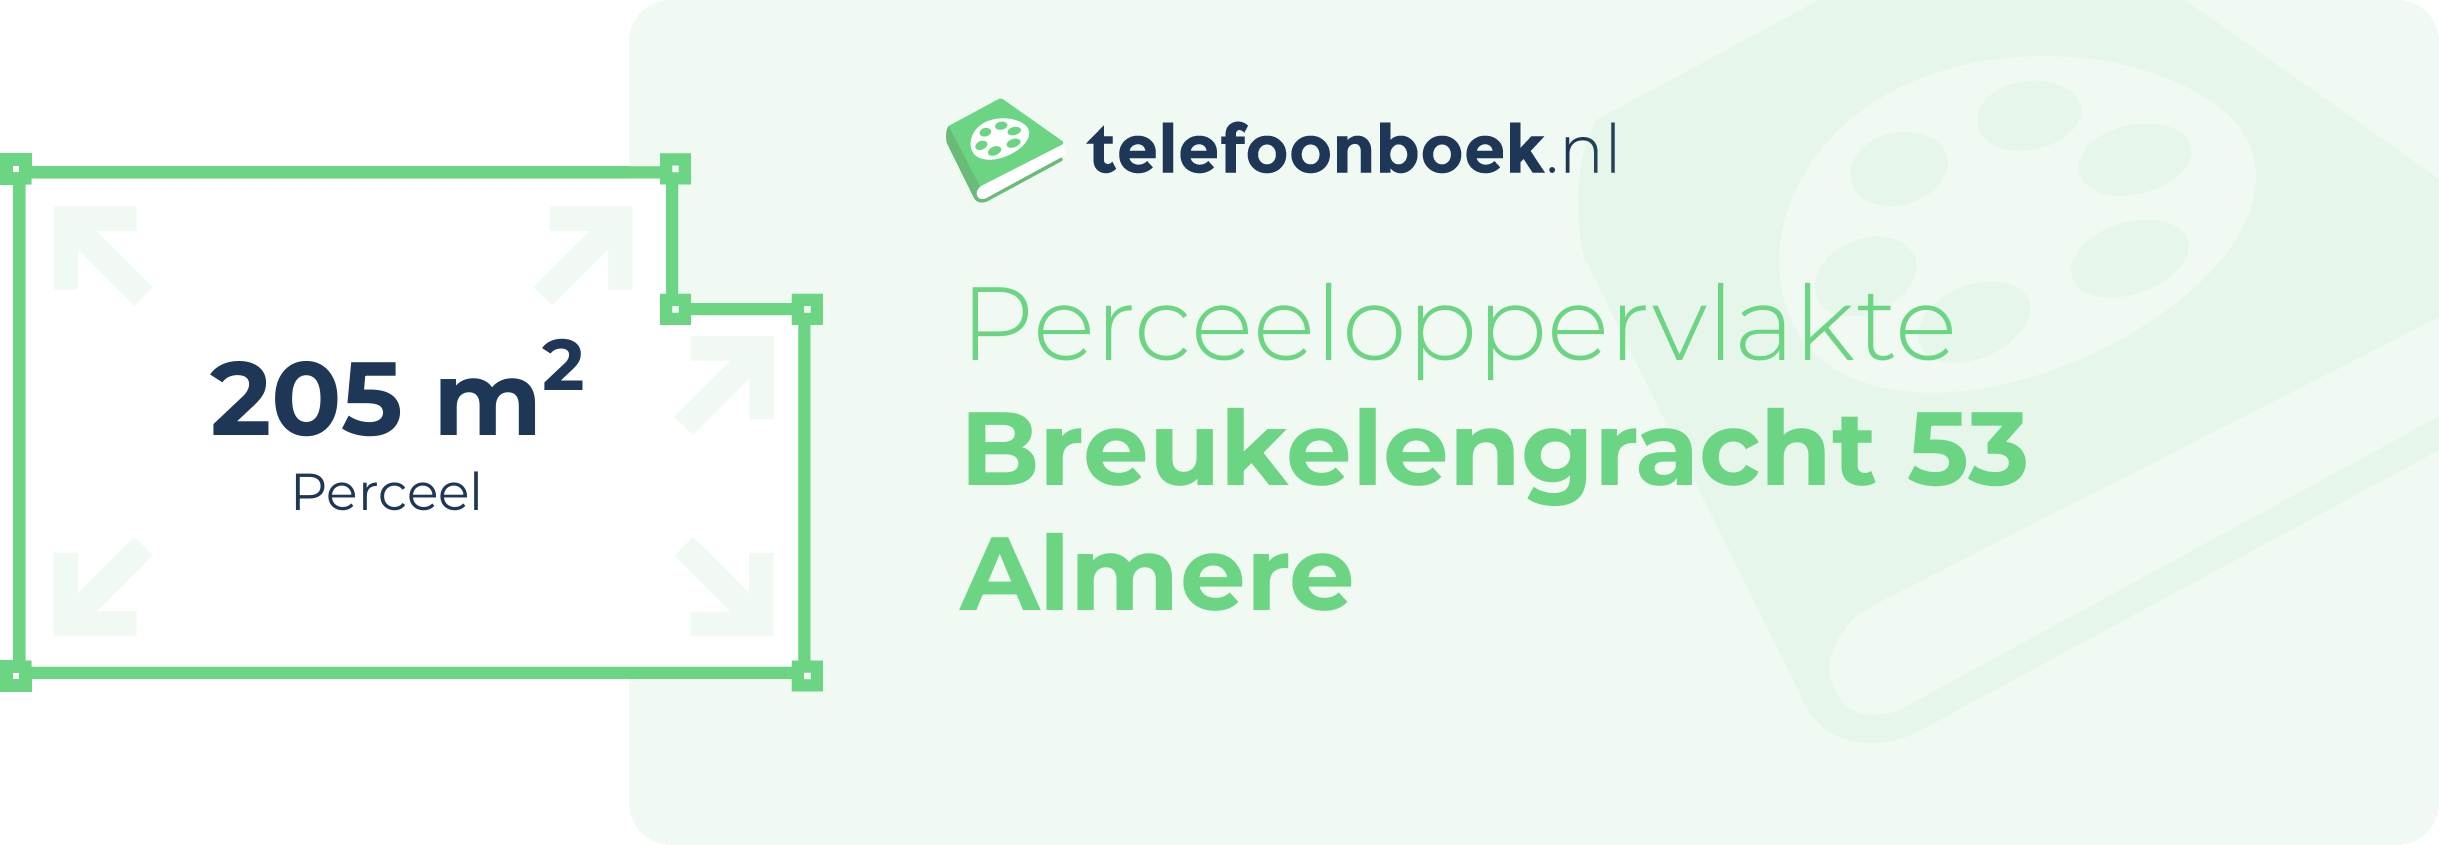 Perceeloppervlakte Breukelengracht 53 Almere